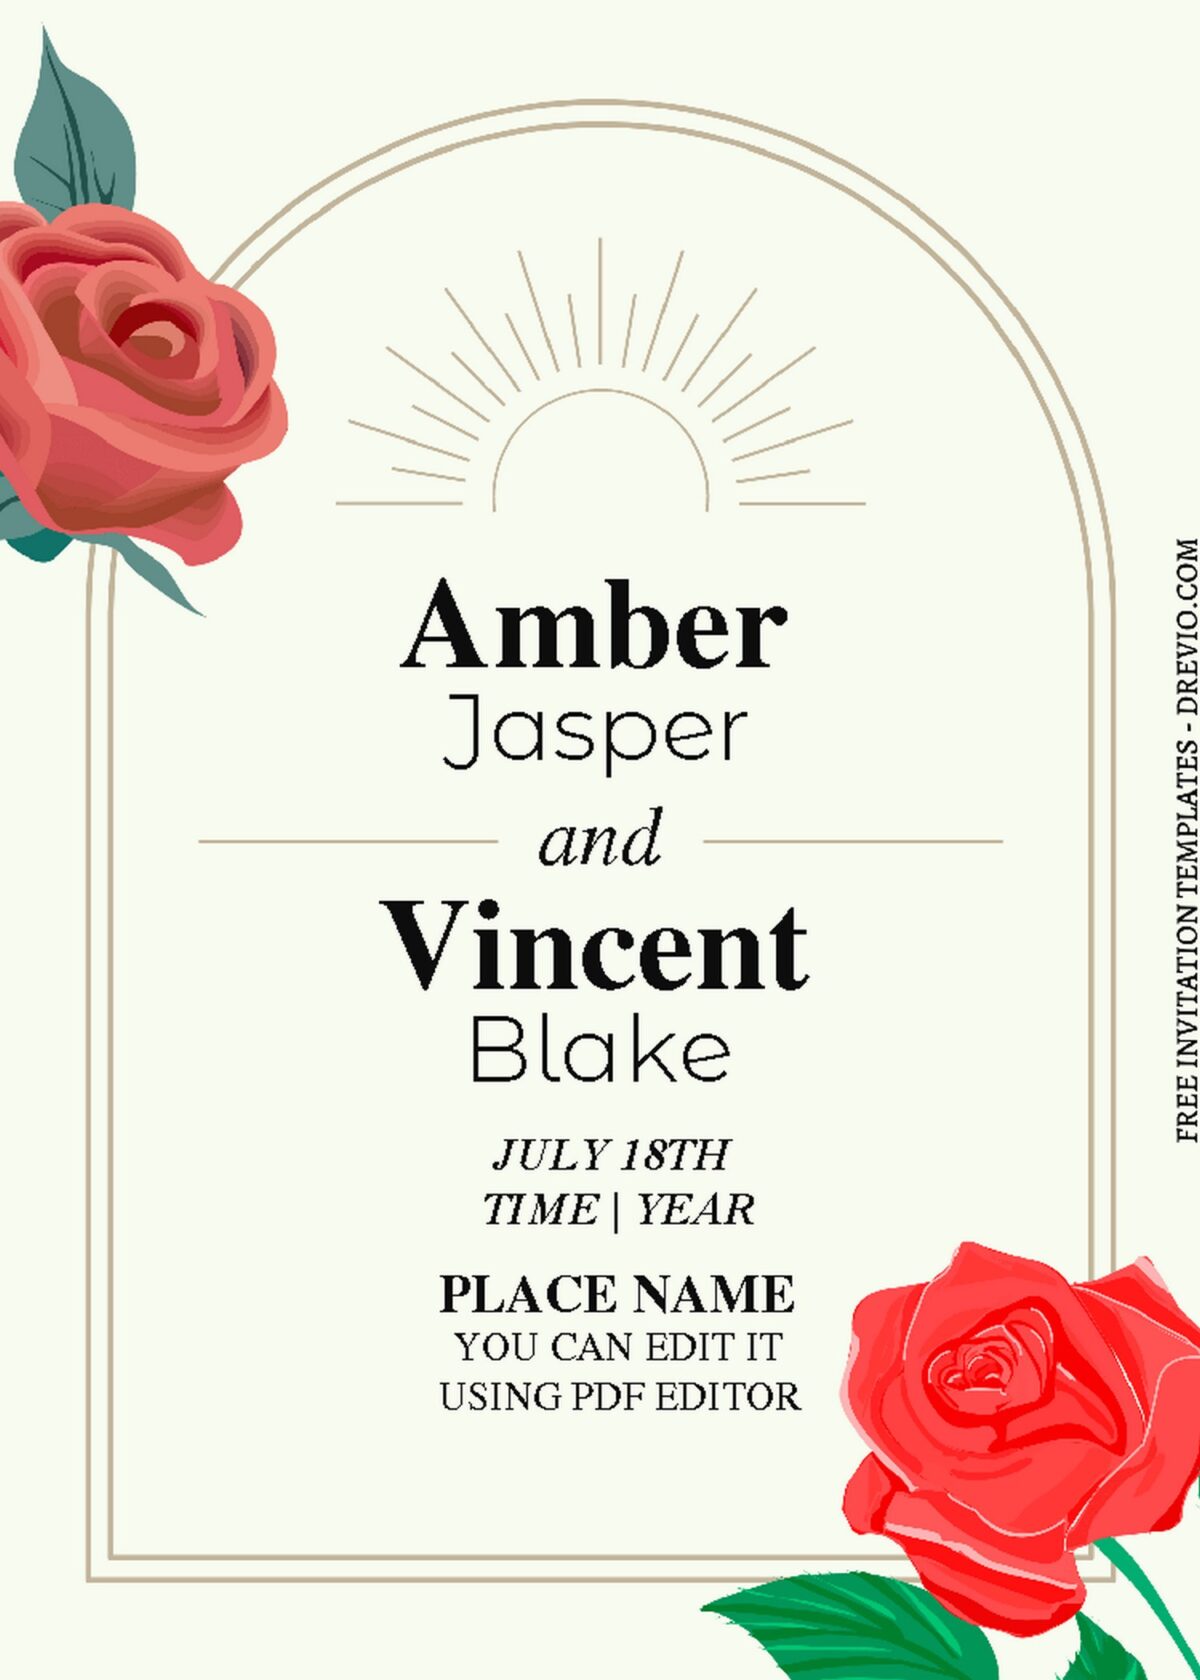 (Free Editable PDF) Bold & Vivid Wedding Invitation Templates with romantic red roses